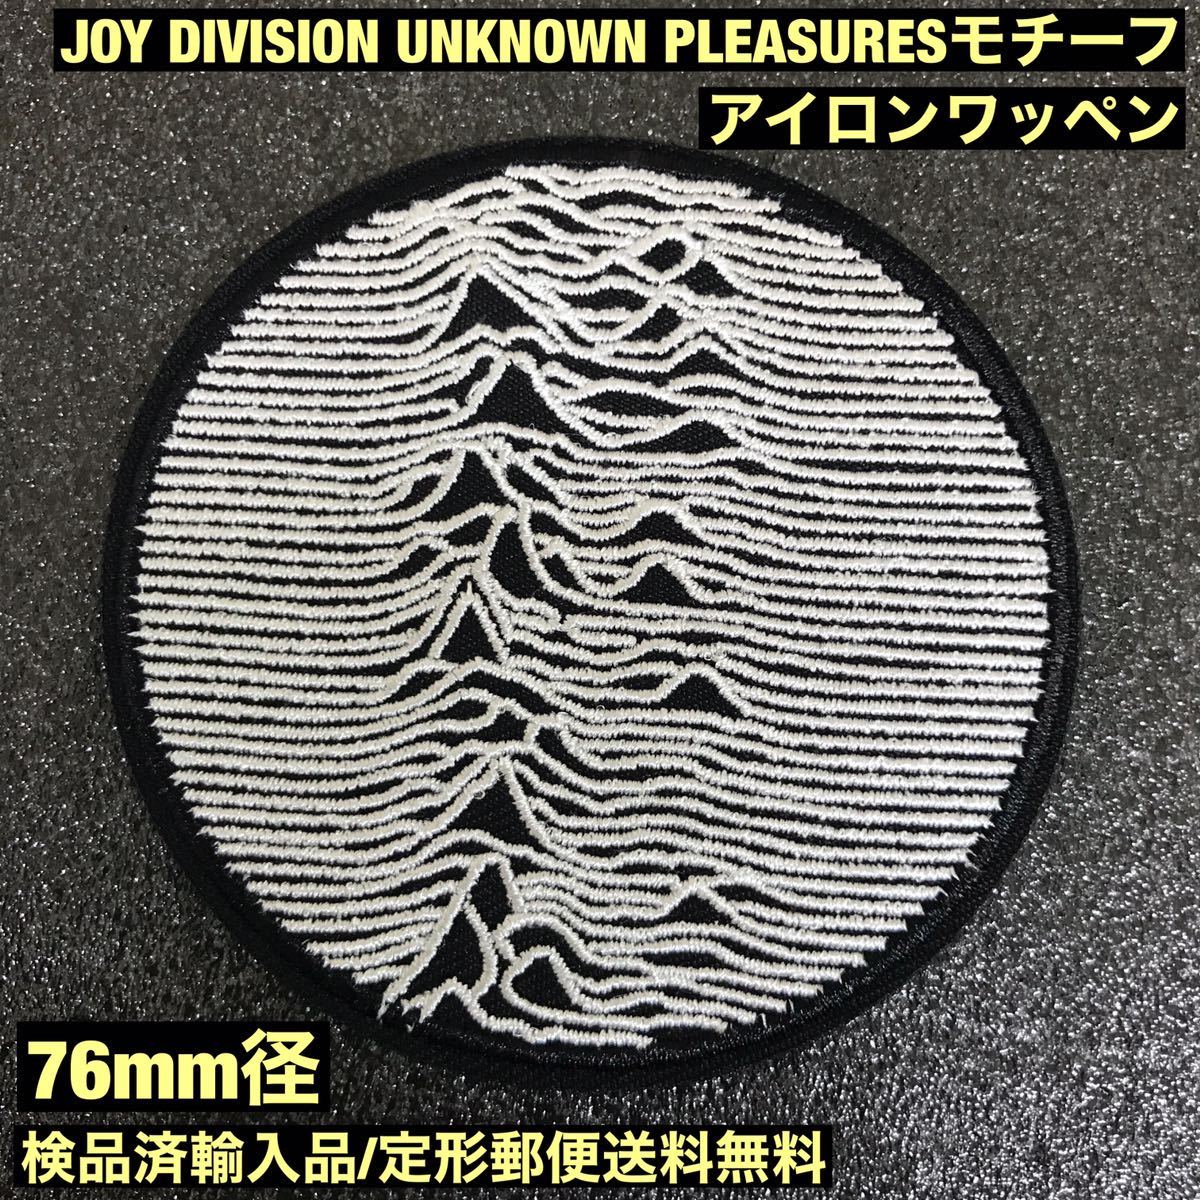 Joy Division 「Unknown Pleasures」モチーフ 76mm径 アイロンワッペン - NEW ORDER FACTORY 80'S 定形郵便送料無料 - sonntagpatches_画像1